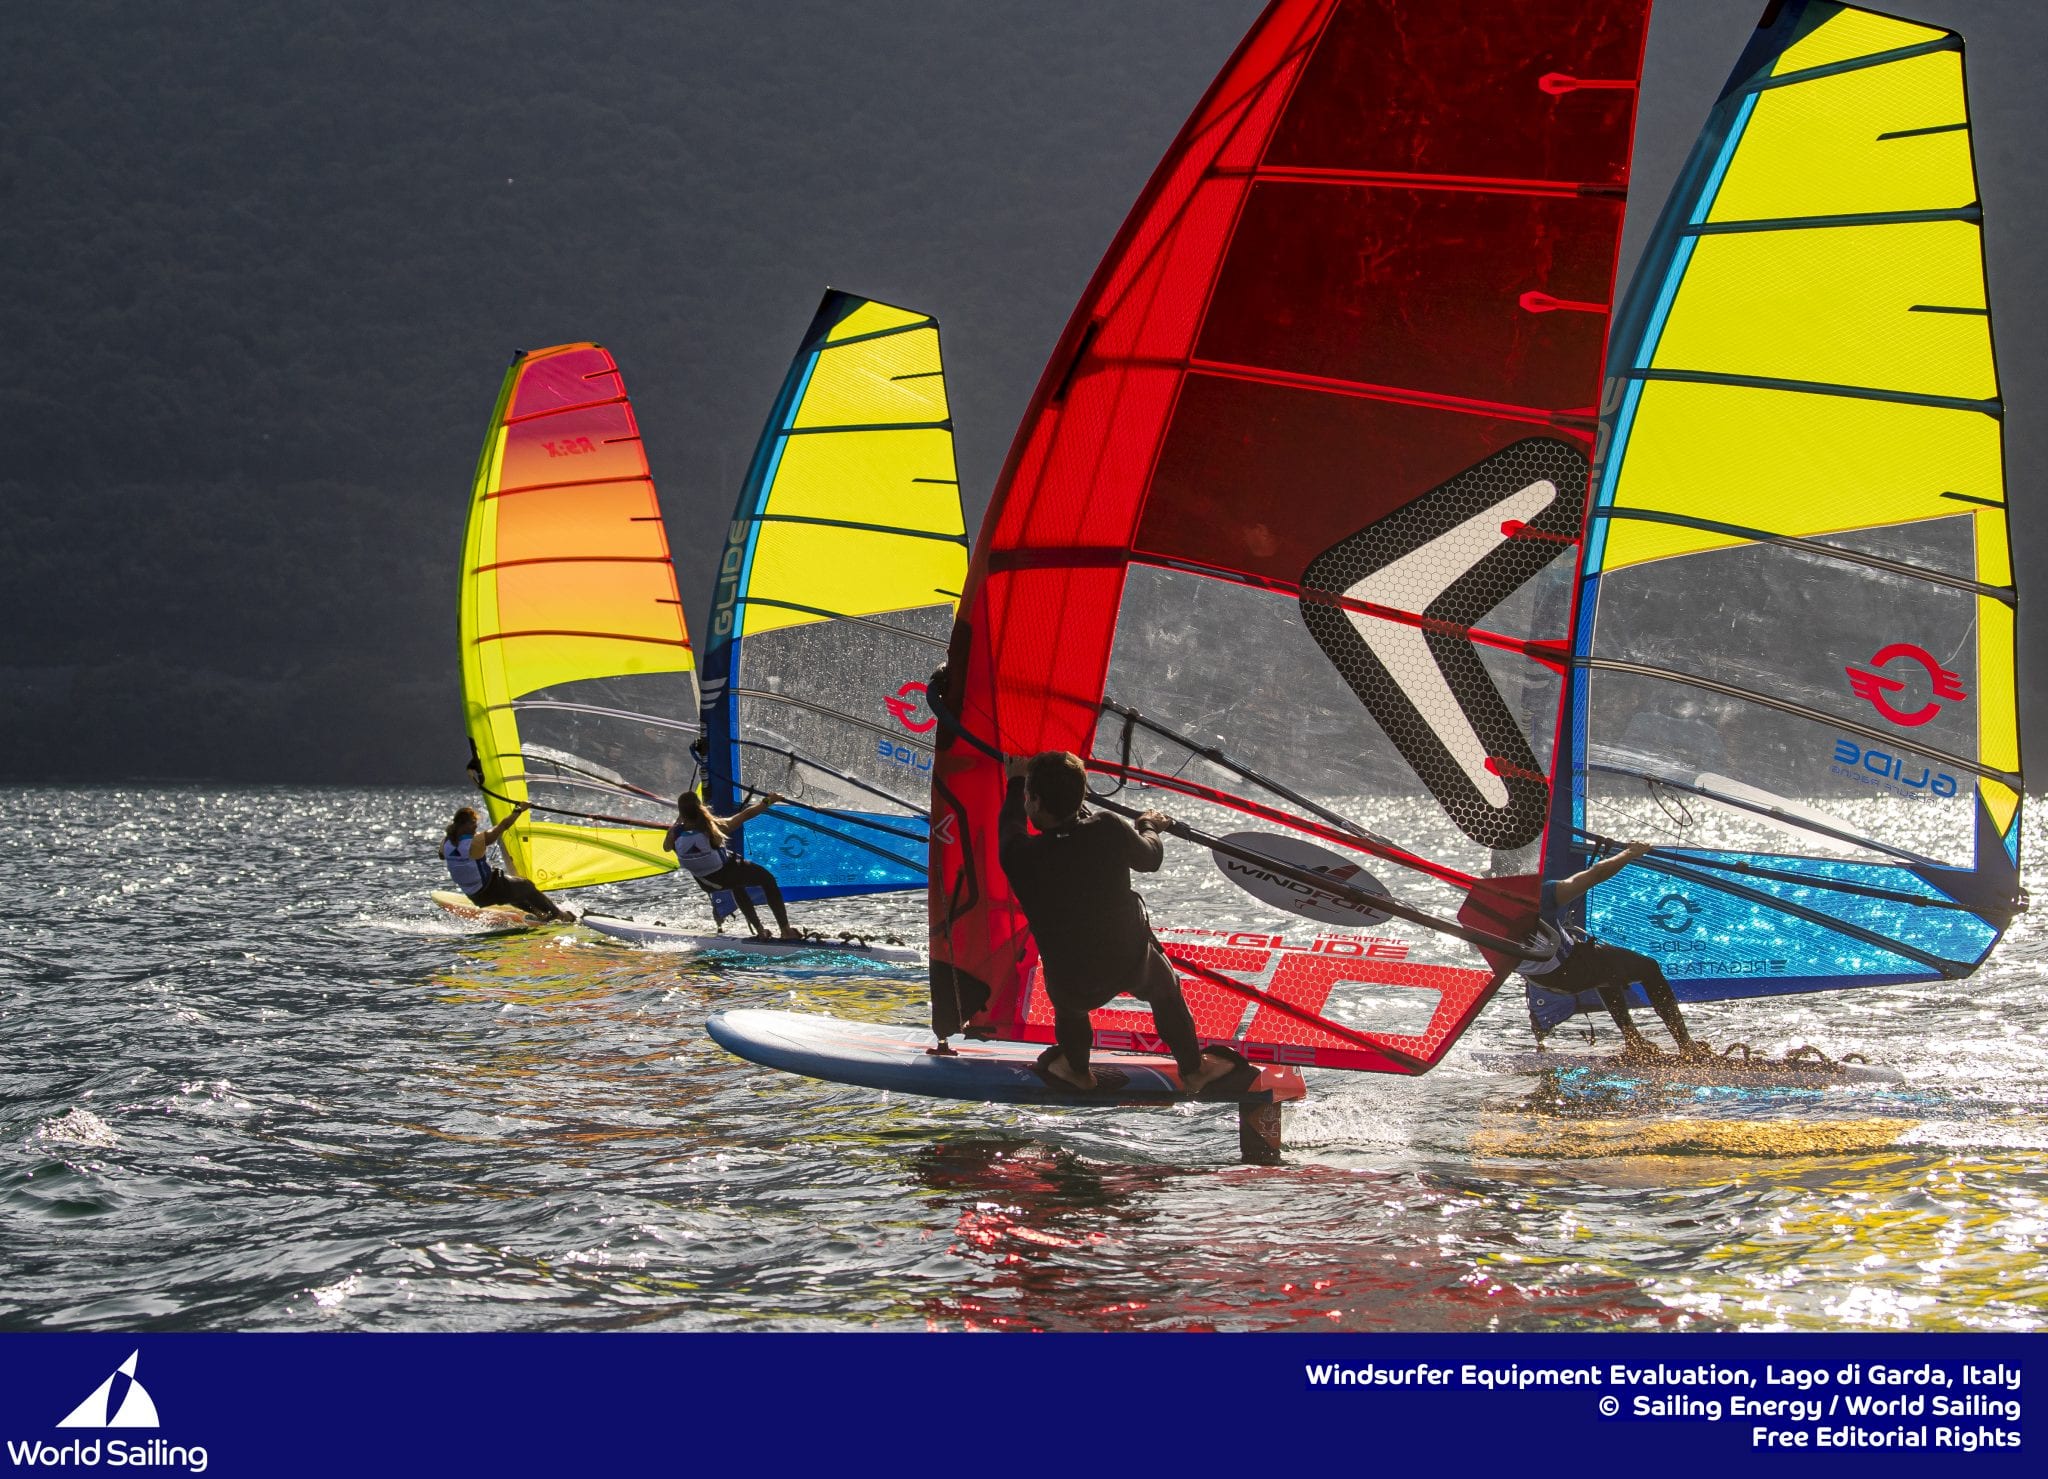 Windsurf Sea-trails 2019 , Lago di Garda, Italy. Jesus Renedo/Sailing Energy/World Sailing 30 September, 2019.